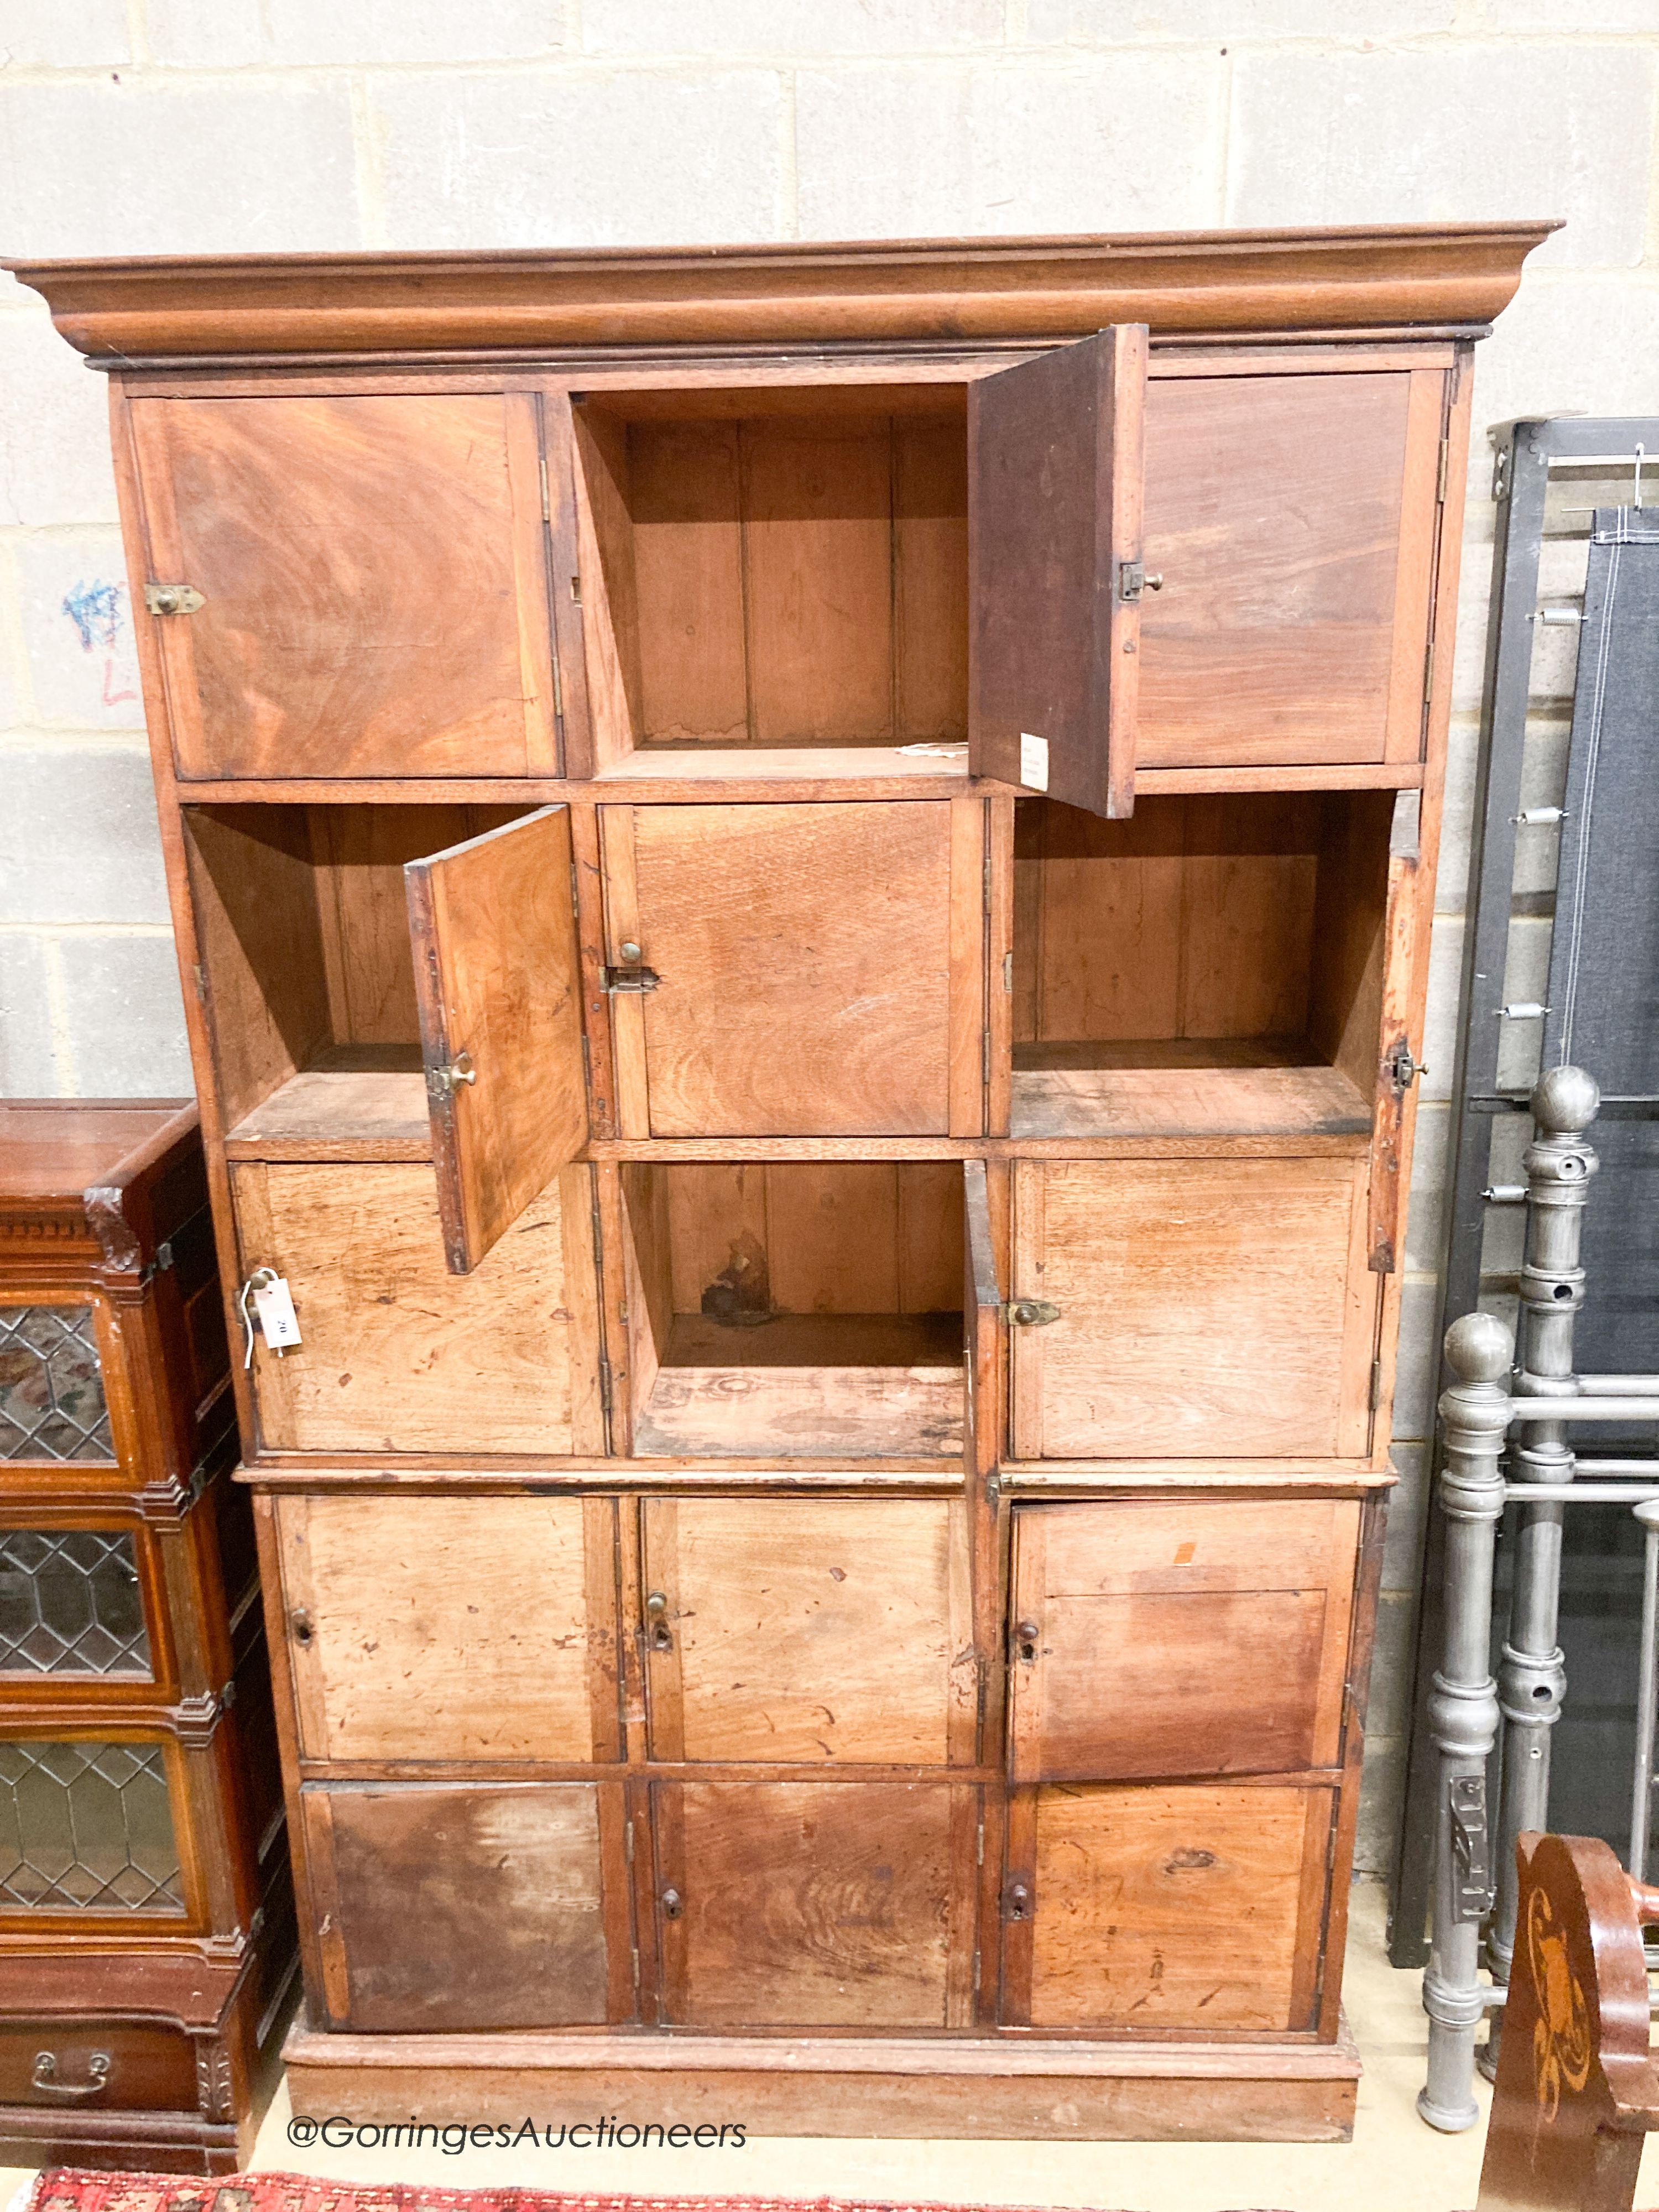 A 19th century mahogany stationery cupboard, width 130cm, depth 47cm, height 204cm